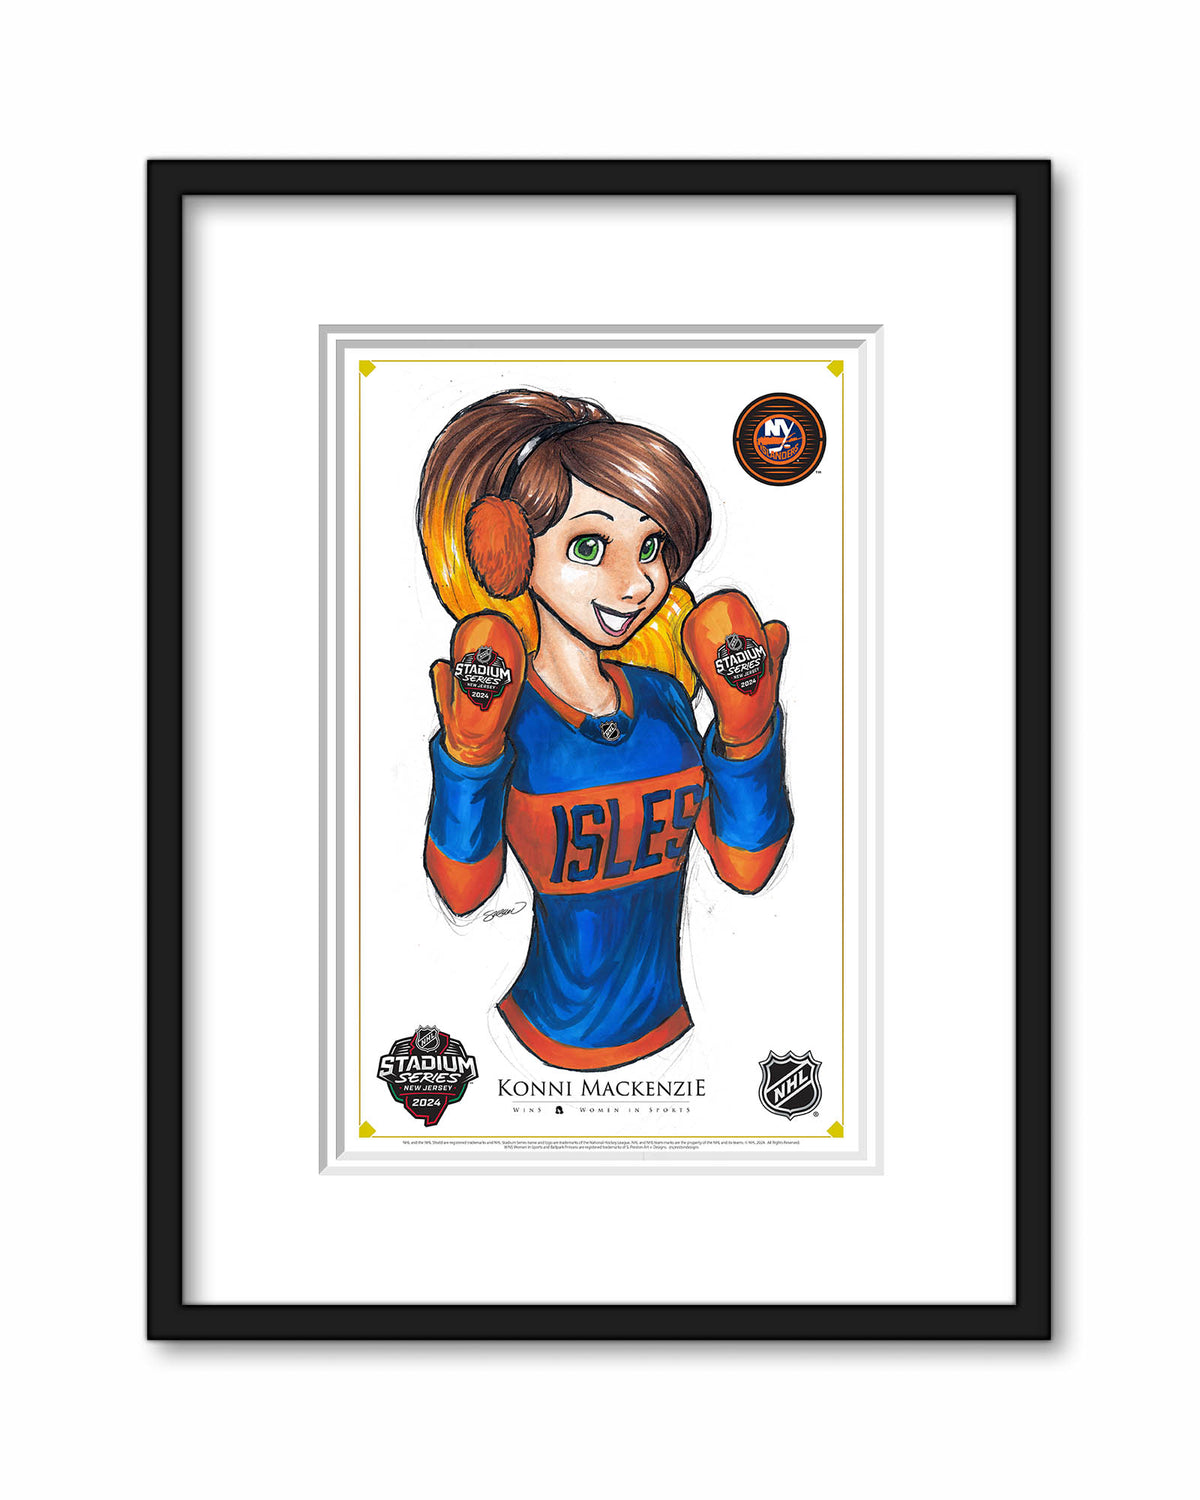 WinS® NHL Konni Mackenzie 2024 Stadium Series New York Islanders Poster Print